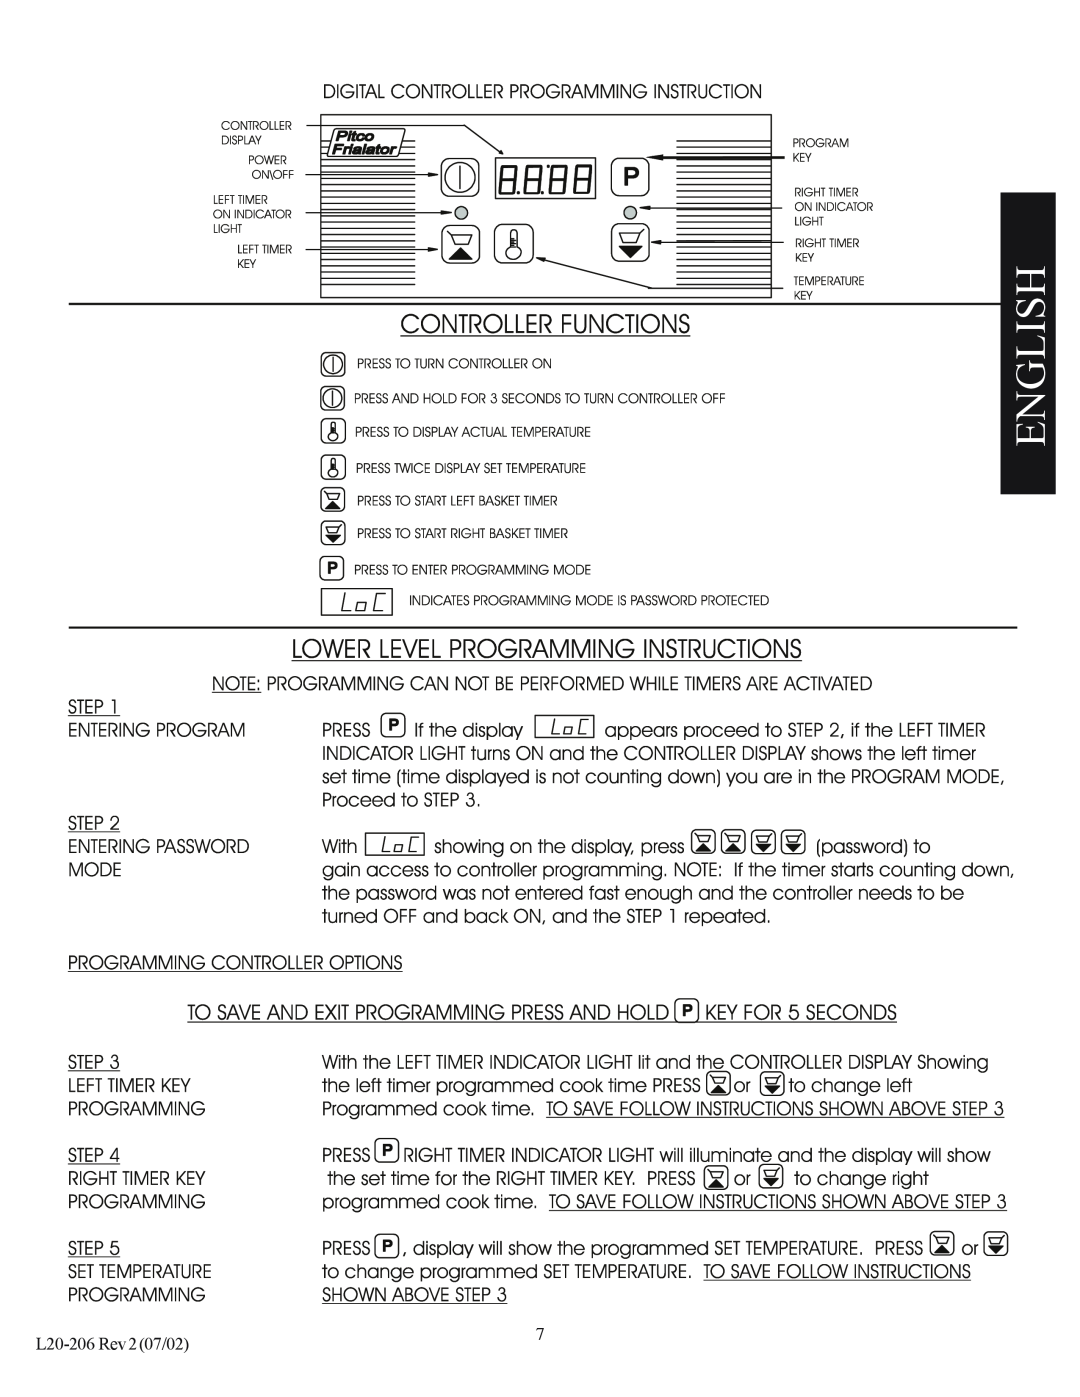 Pitco Frialator SG operation manual English, L20-206 Rev207/02 